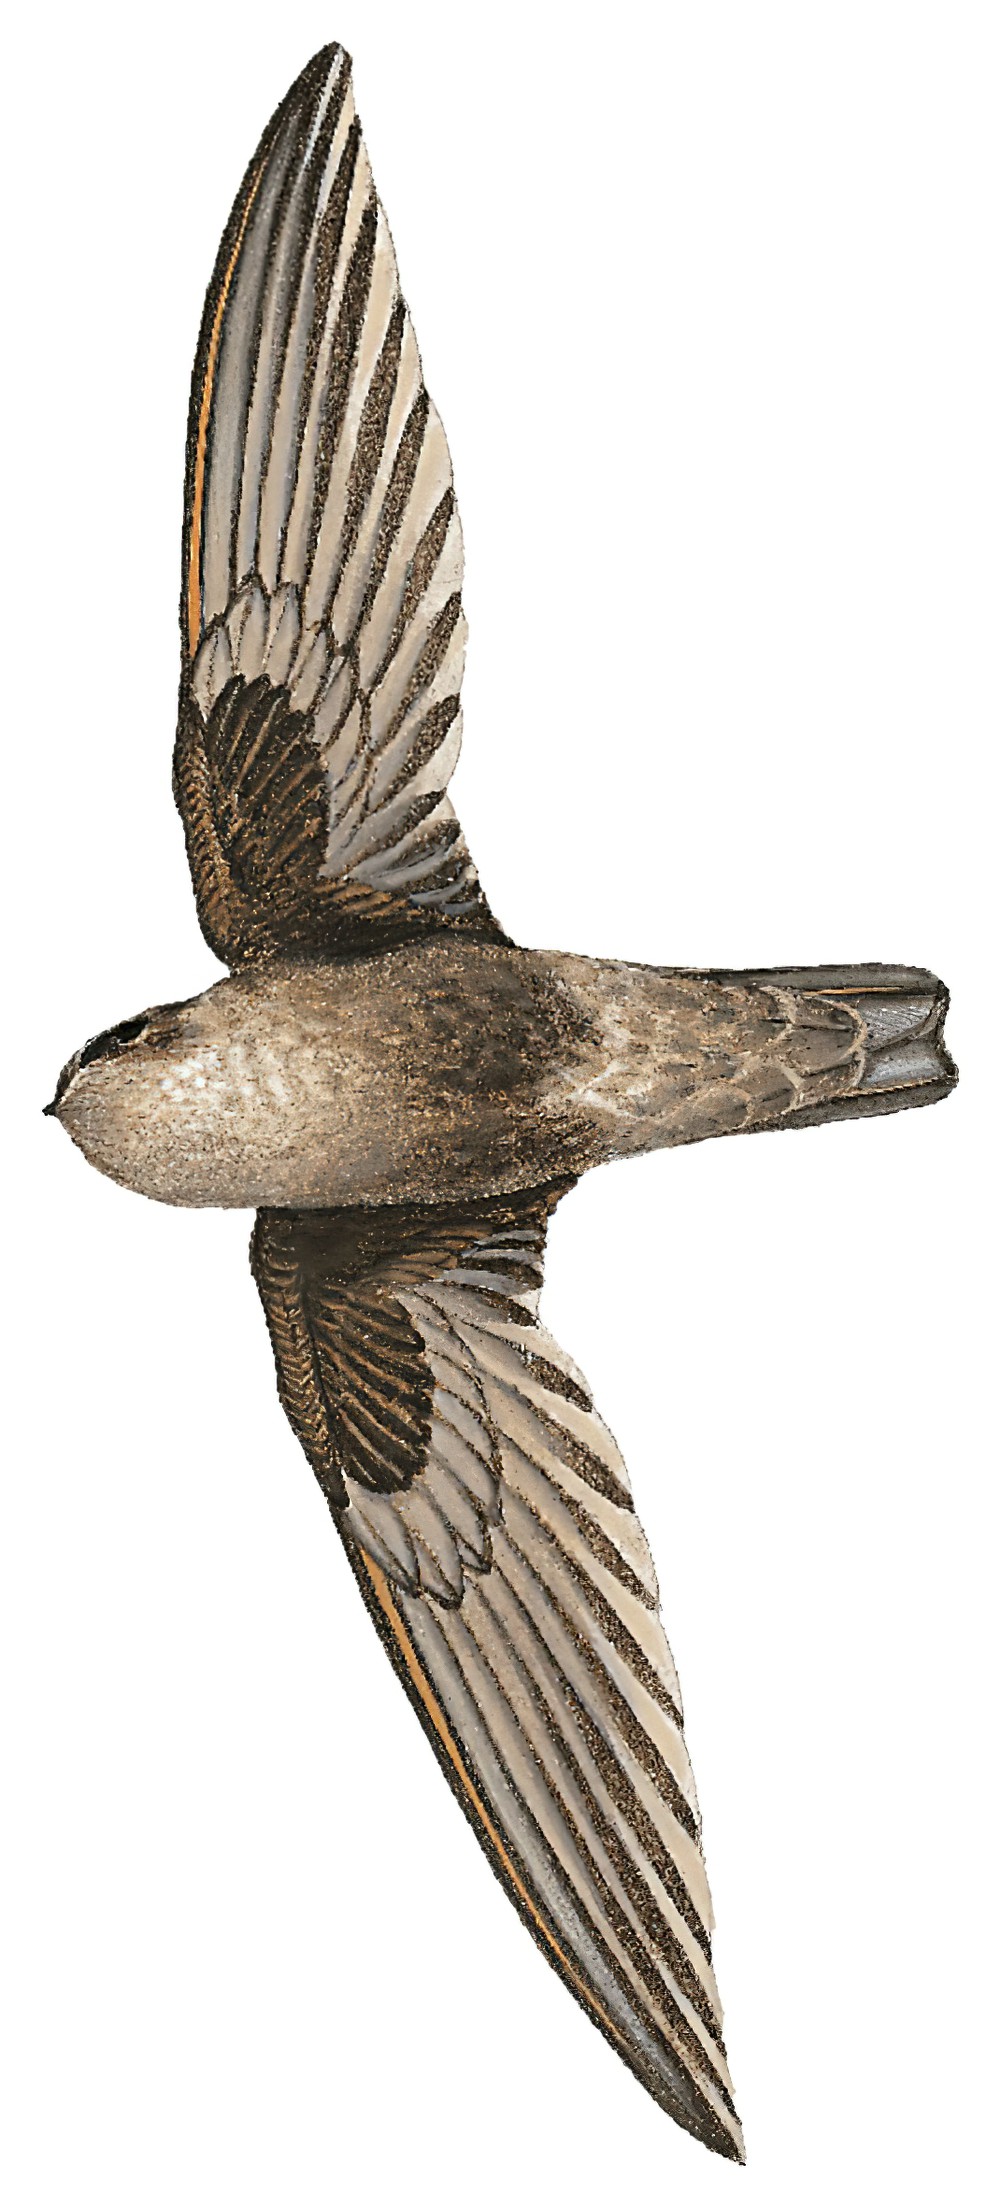 Black-nest Swiftlet / Aerodramus maximus